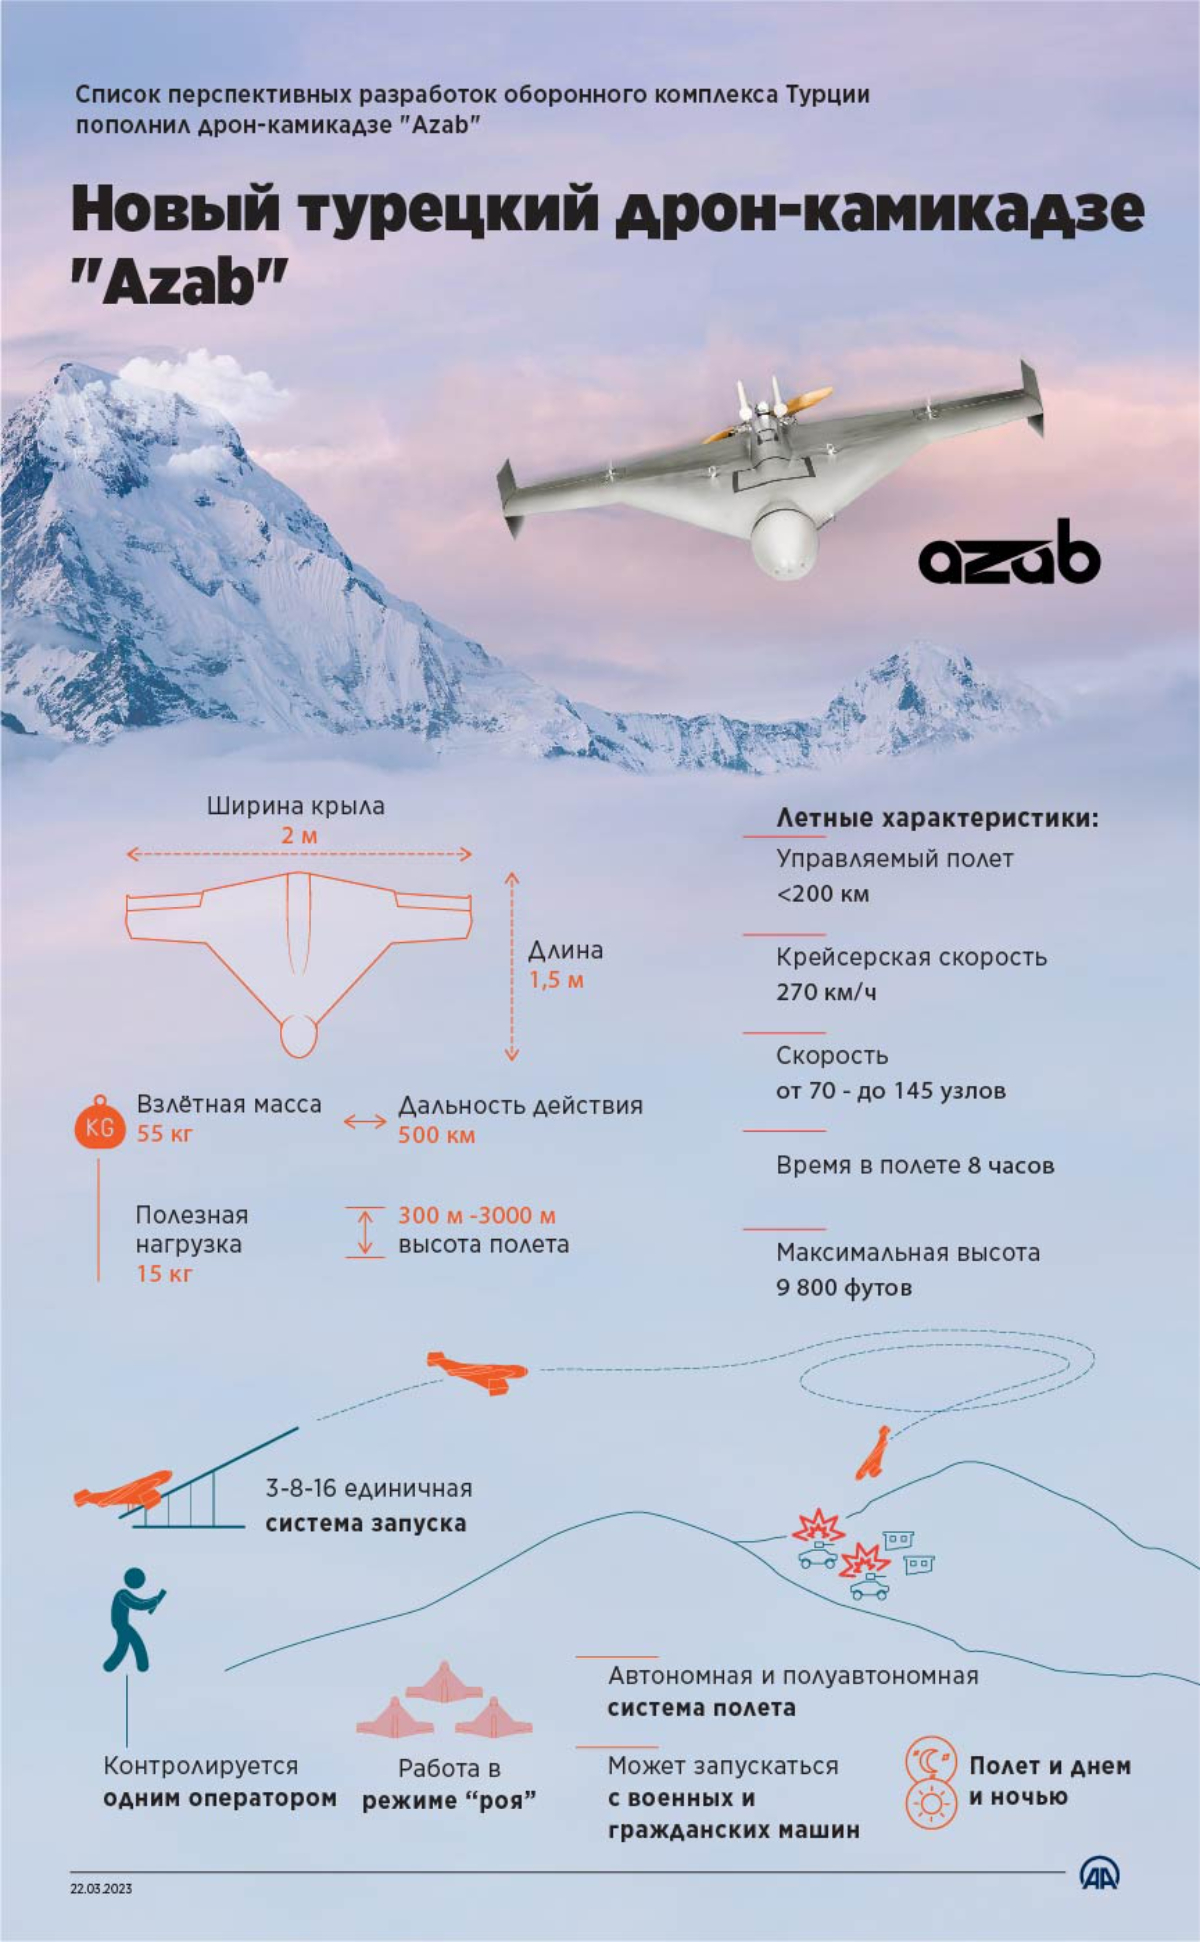 Новый турецкий дрон-камикадзе "Azab"